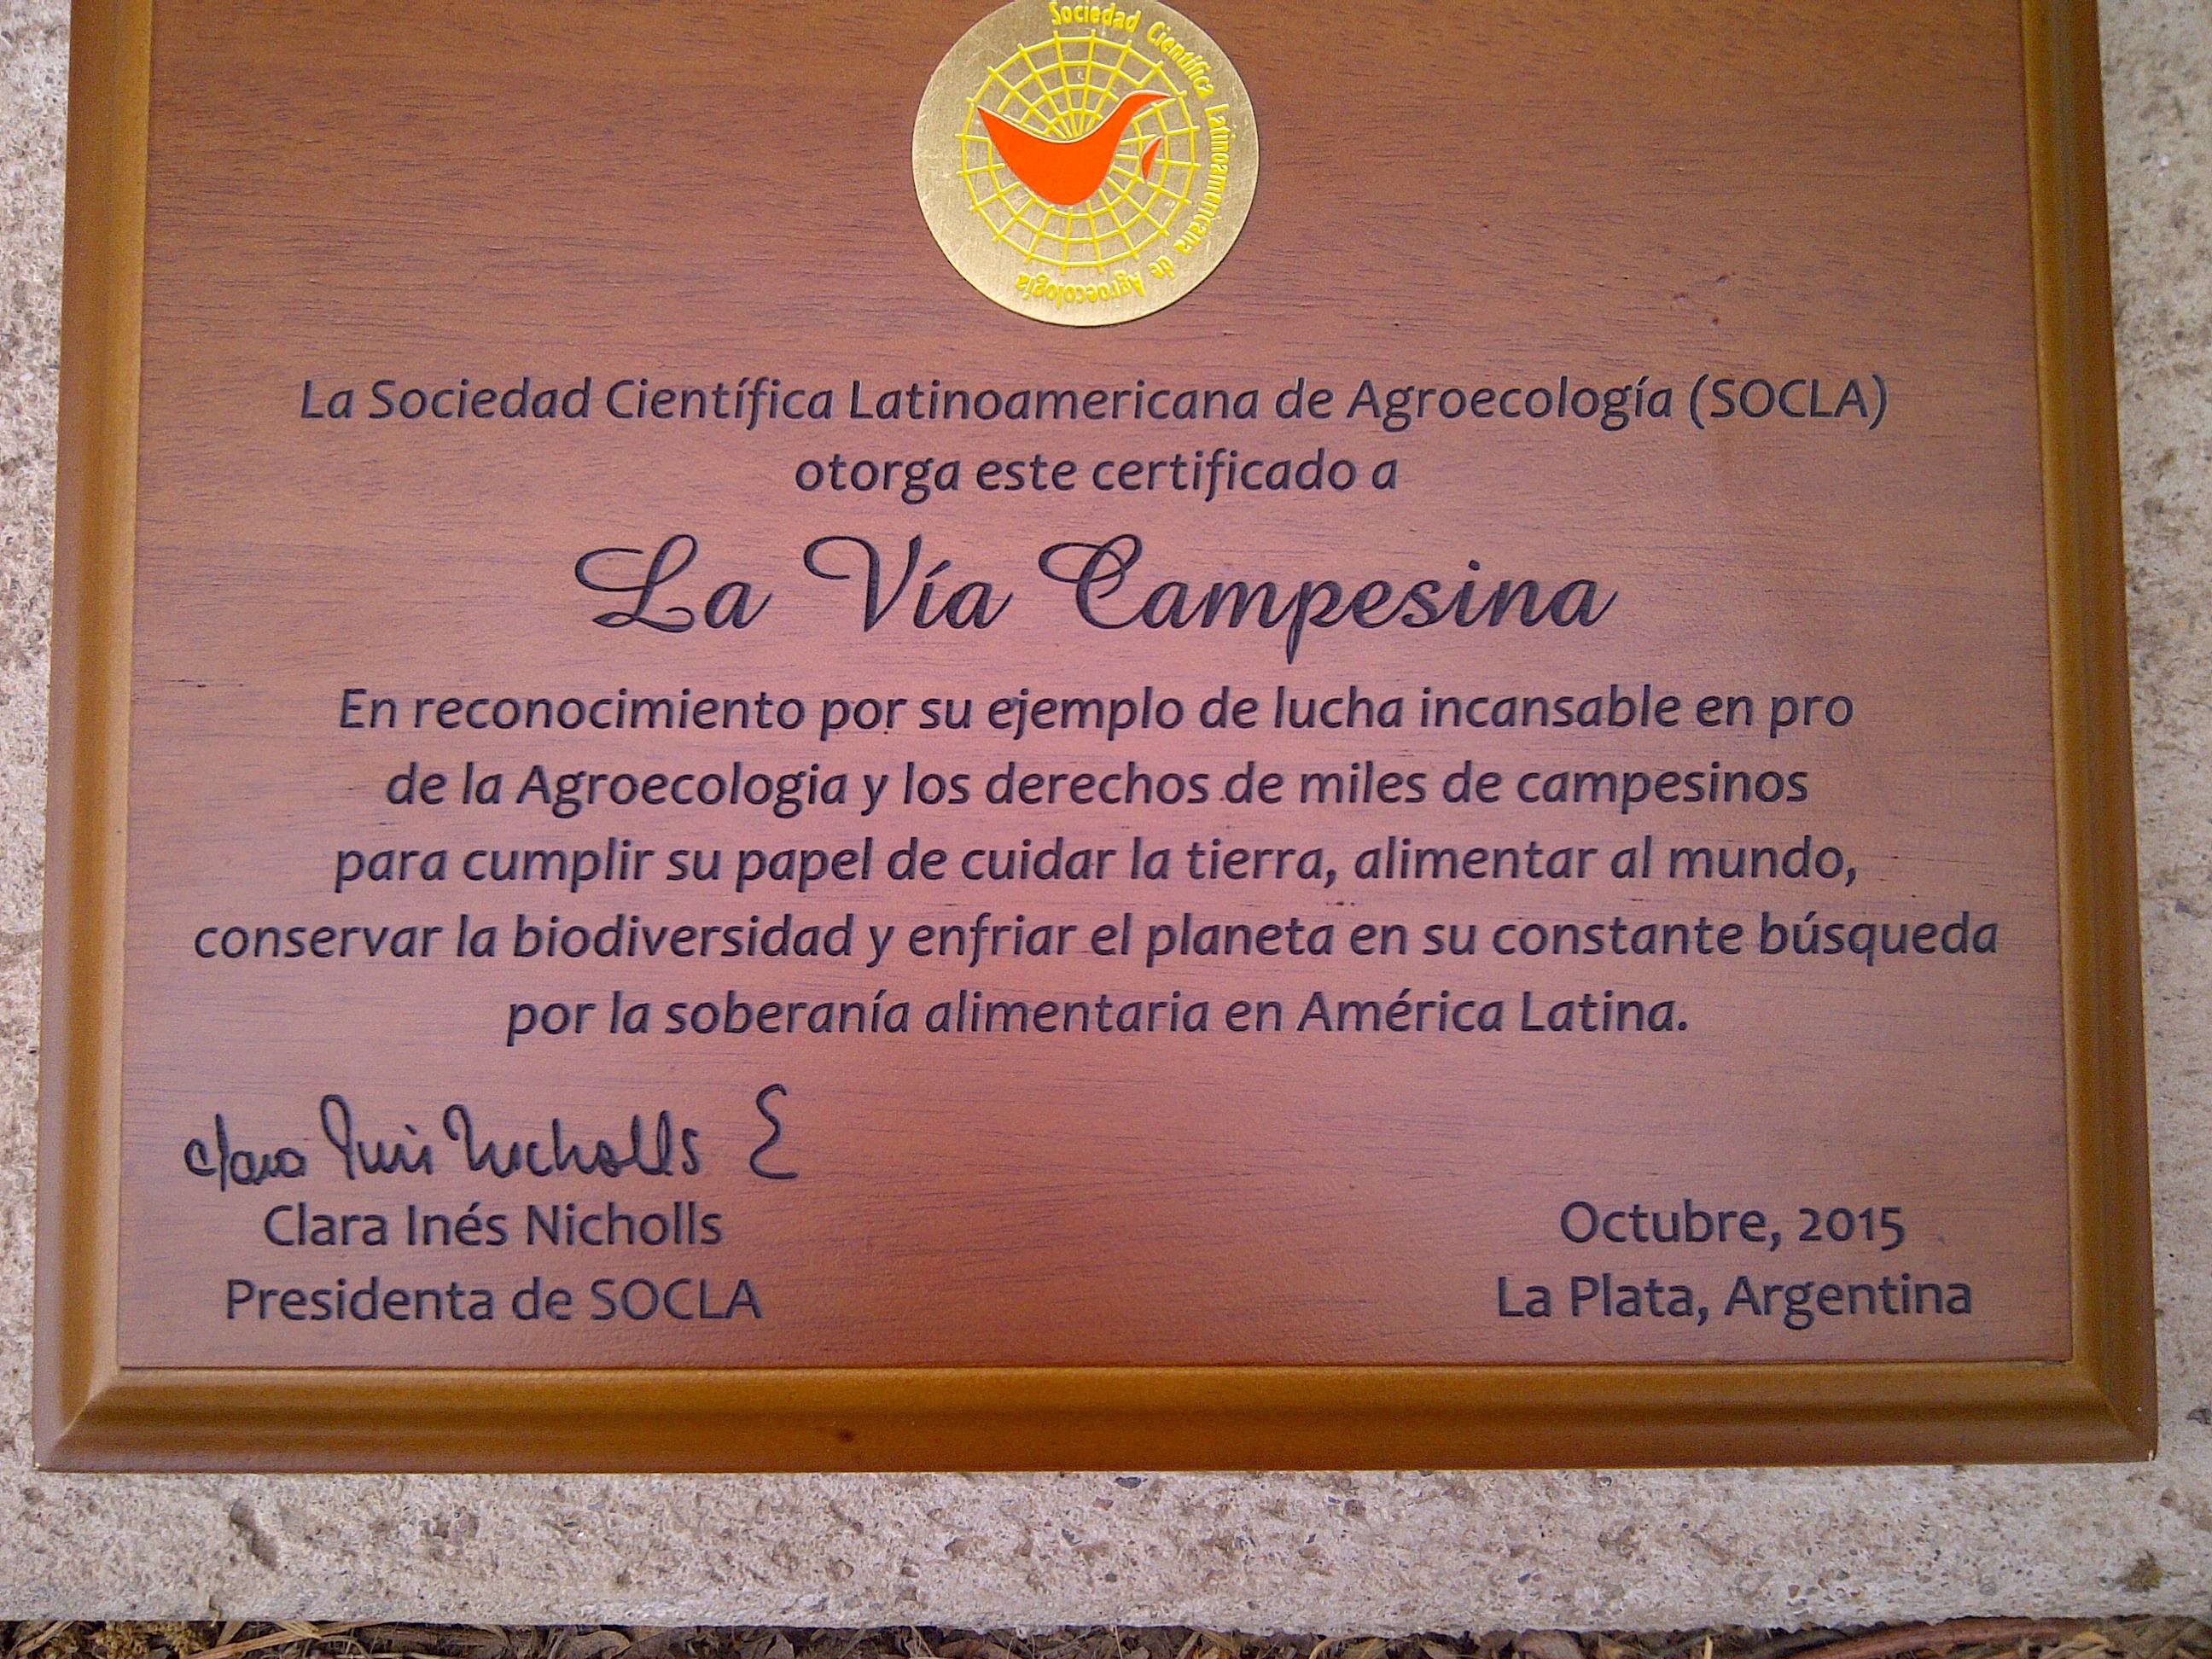 The award given by SOCLA to La Via Campesina